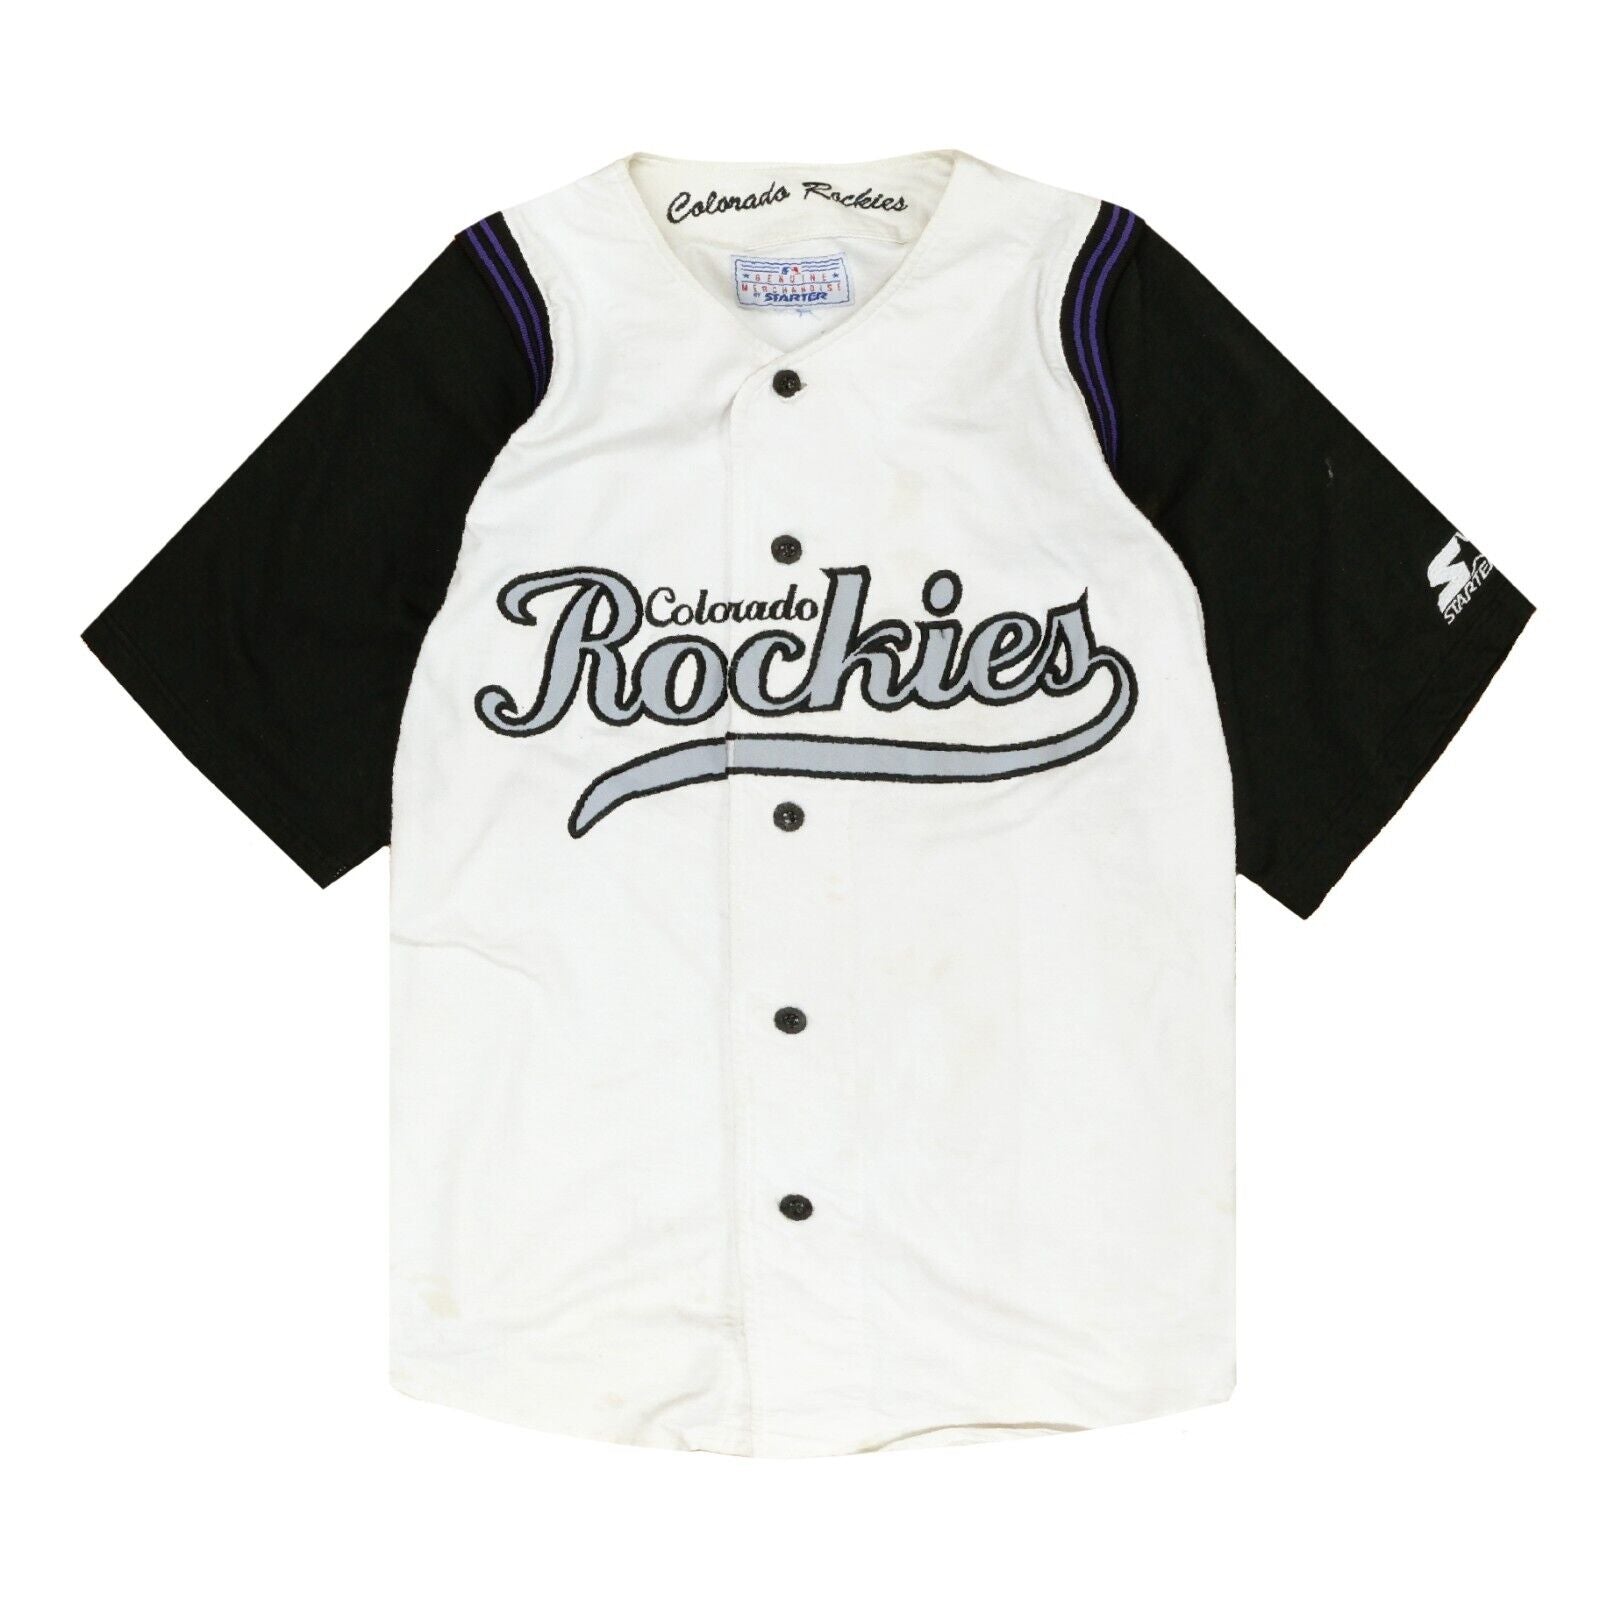 VTG Colorado rockies starter uniform XL